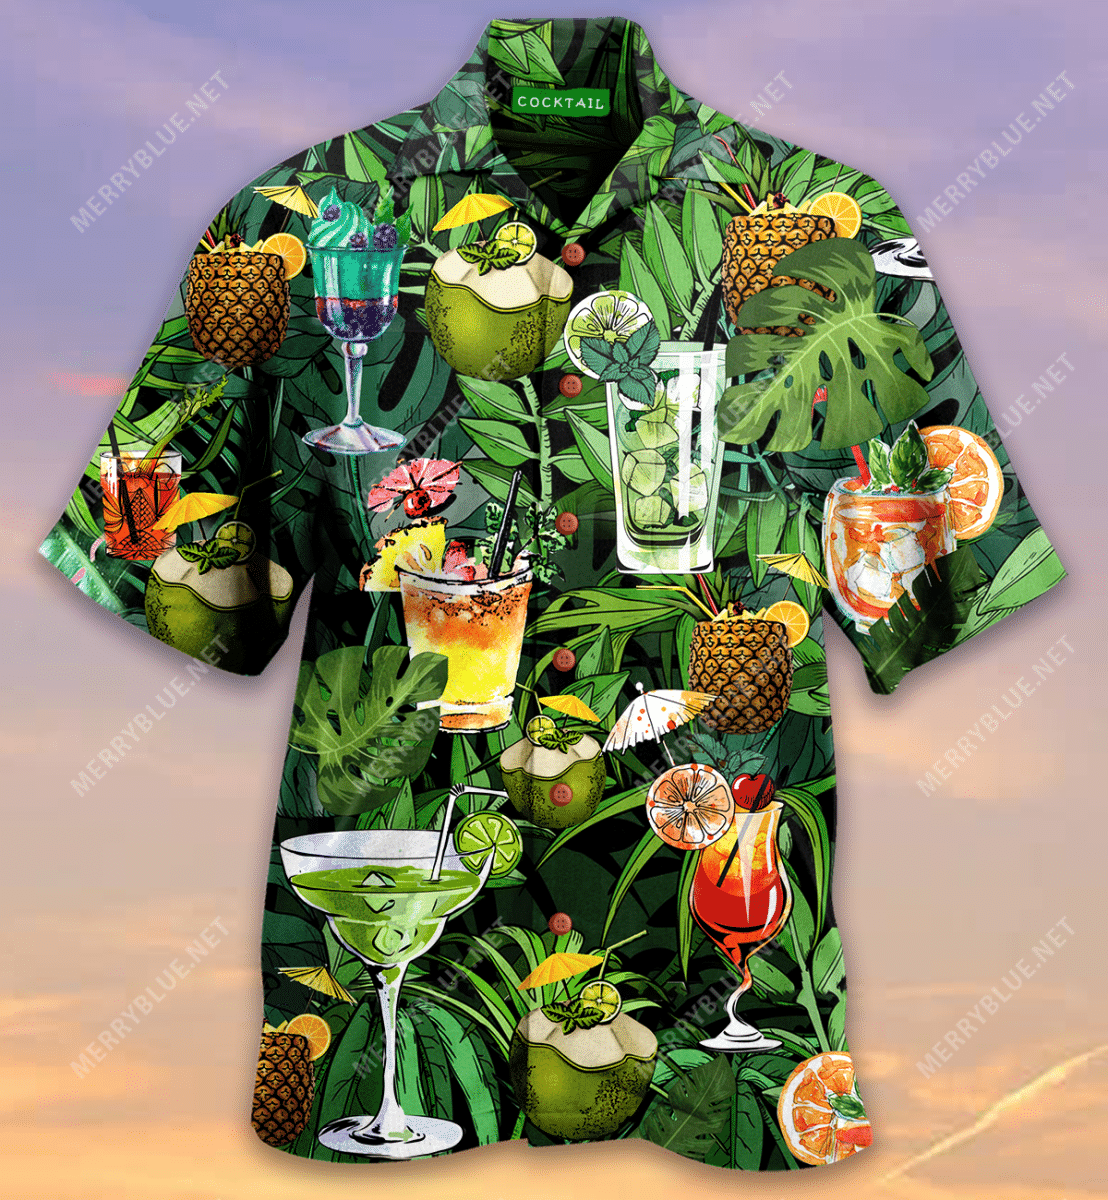 We All Deserve A Cocktail Hawaiian Shirt